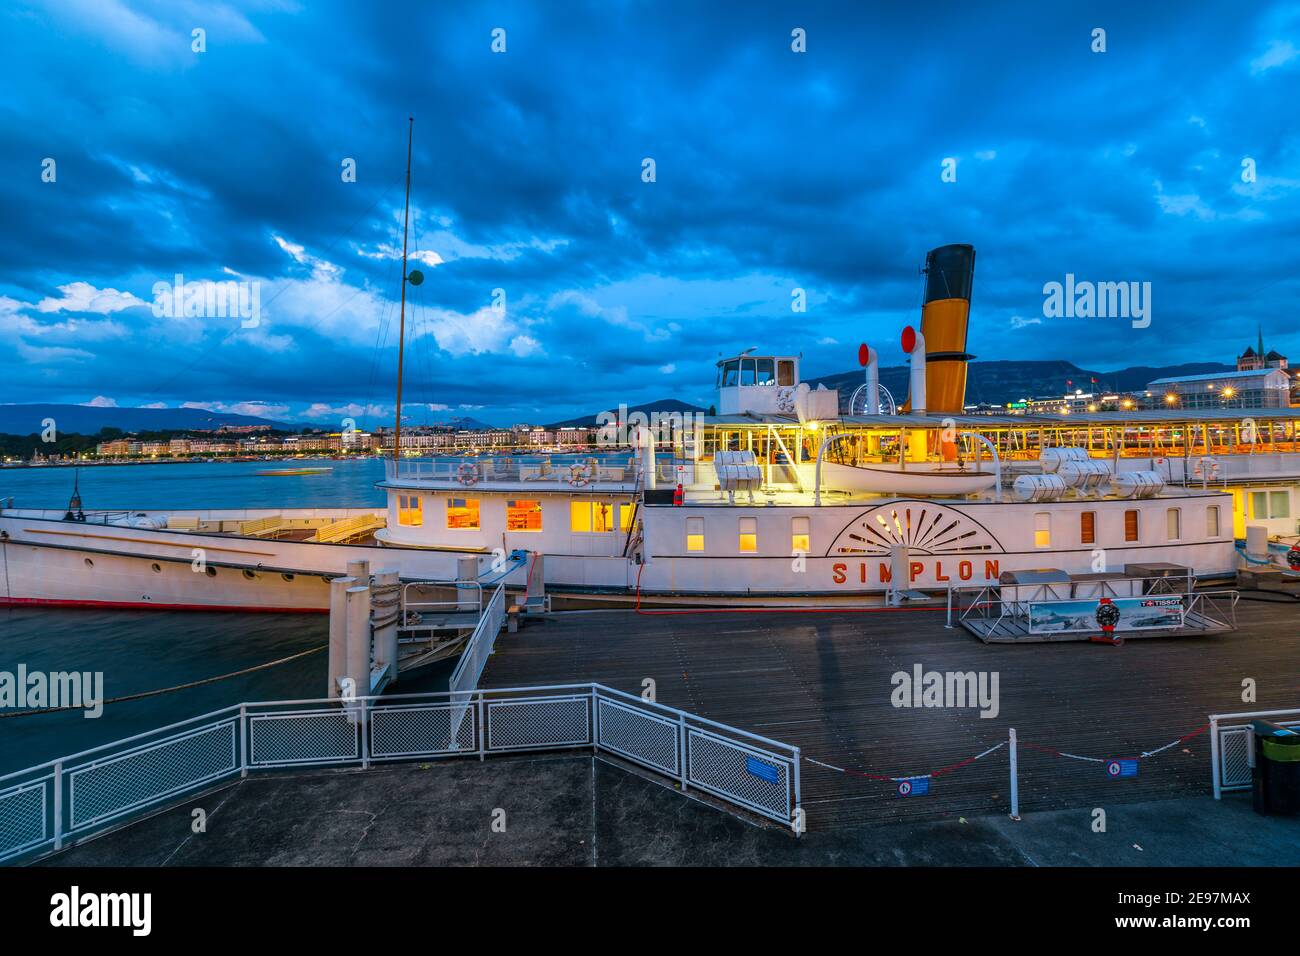 Geneva, Switzerland - Aug 14, 2020: the steam boat Simplon at the pier in Quai du Mont-Blanc ferry terminal at dusk, illuminated in the evening Stock Photo